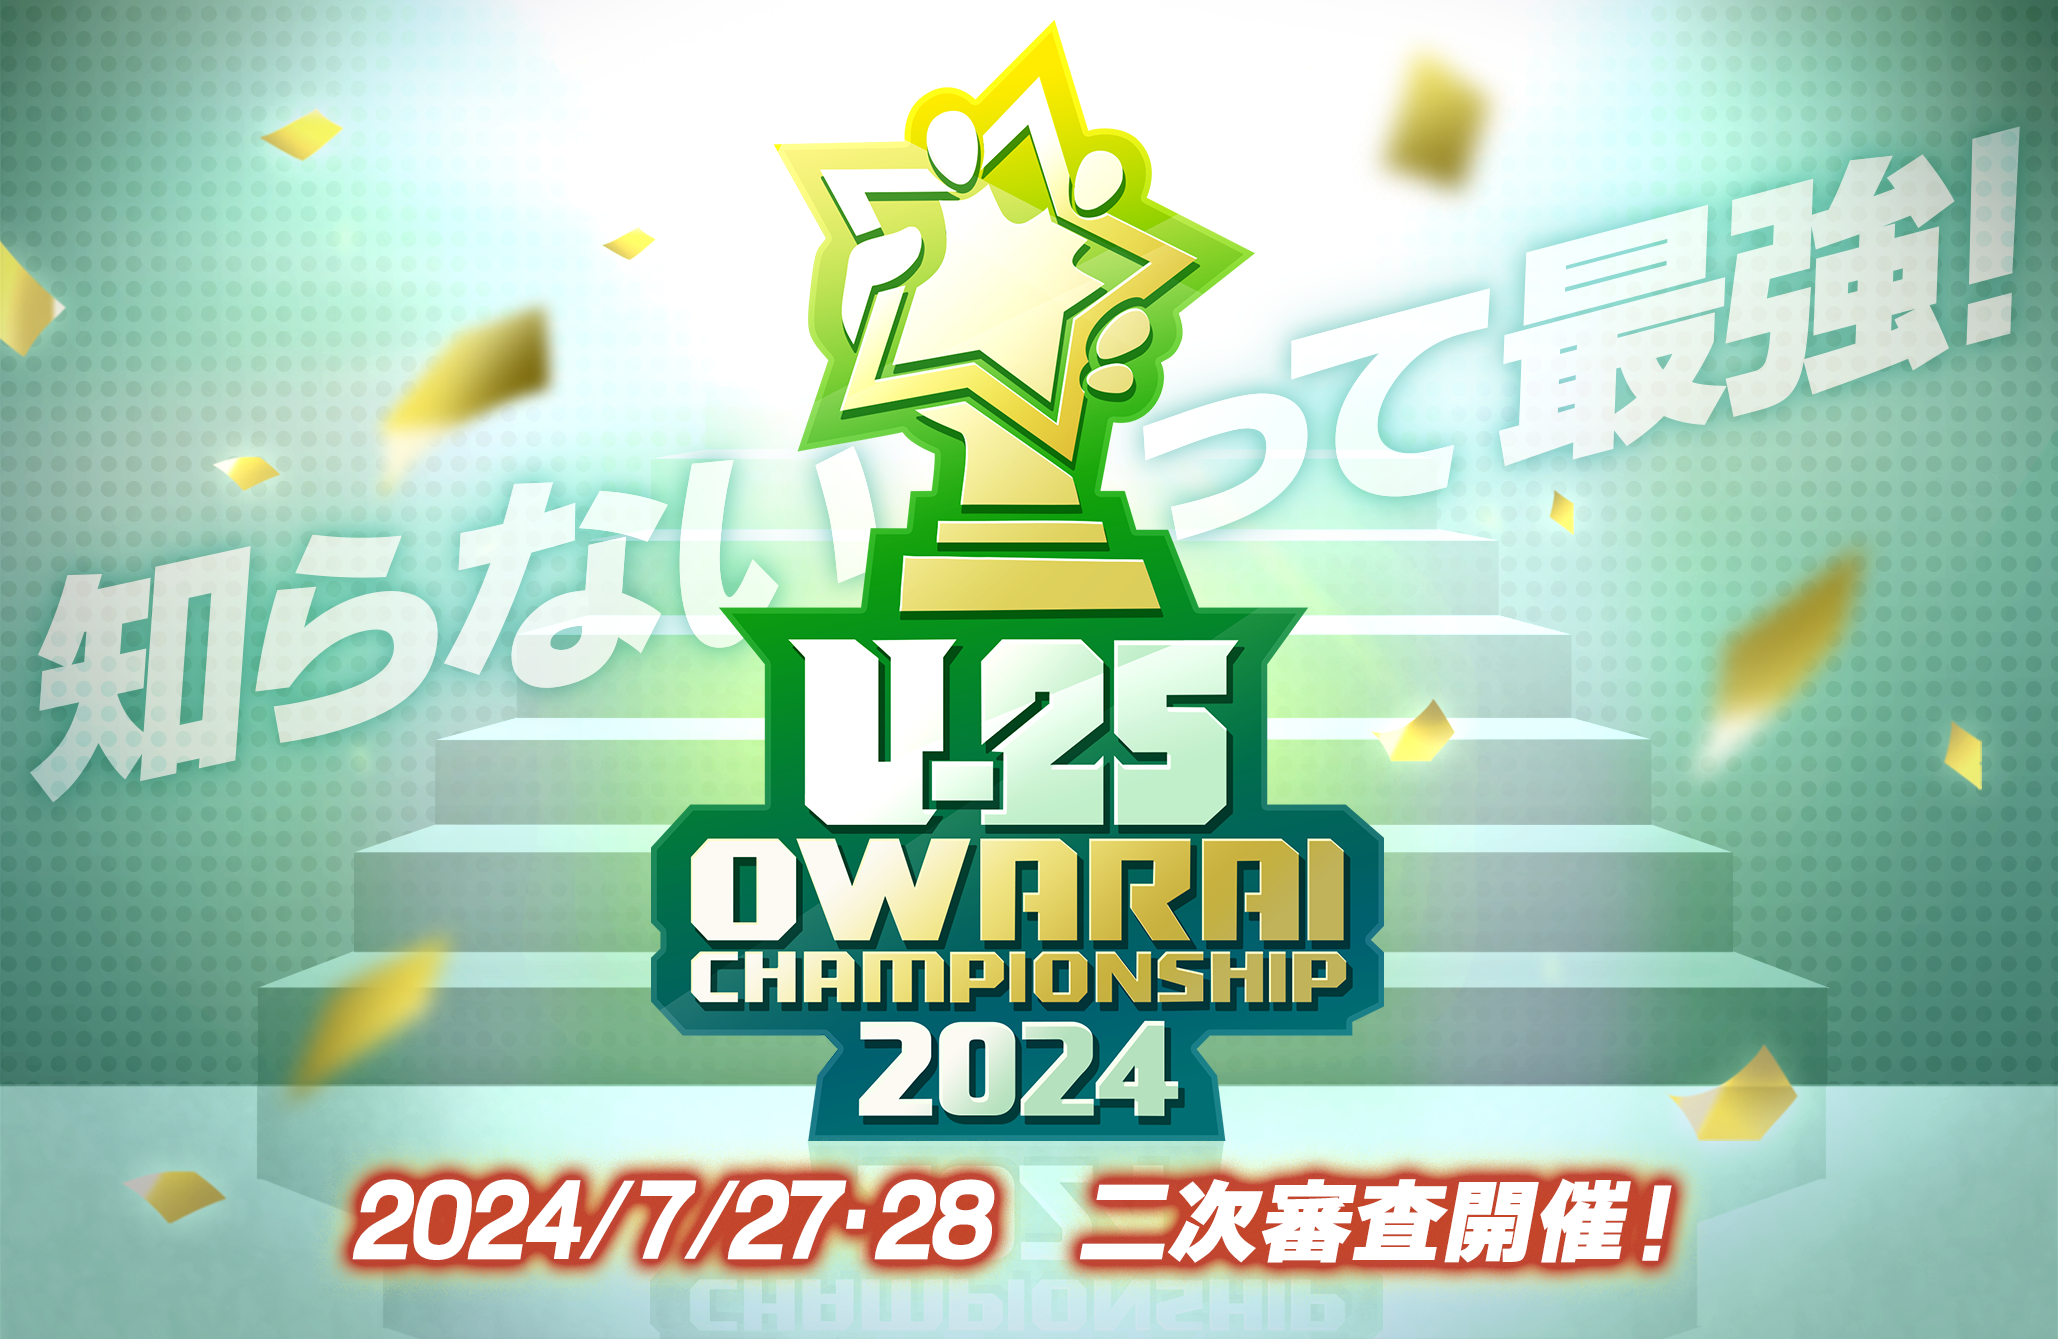 U-25 OWARAI CHAMPIONSHIP